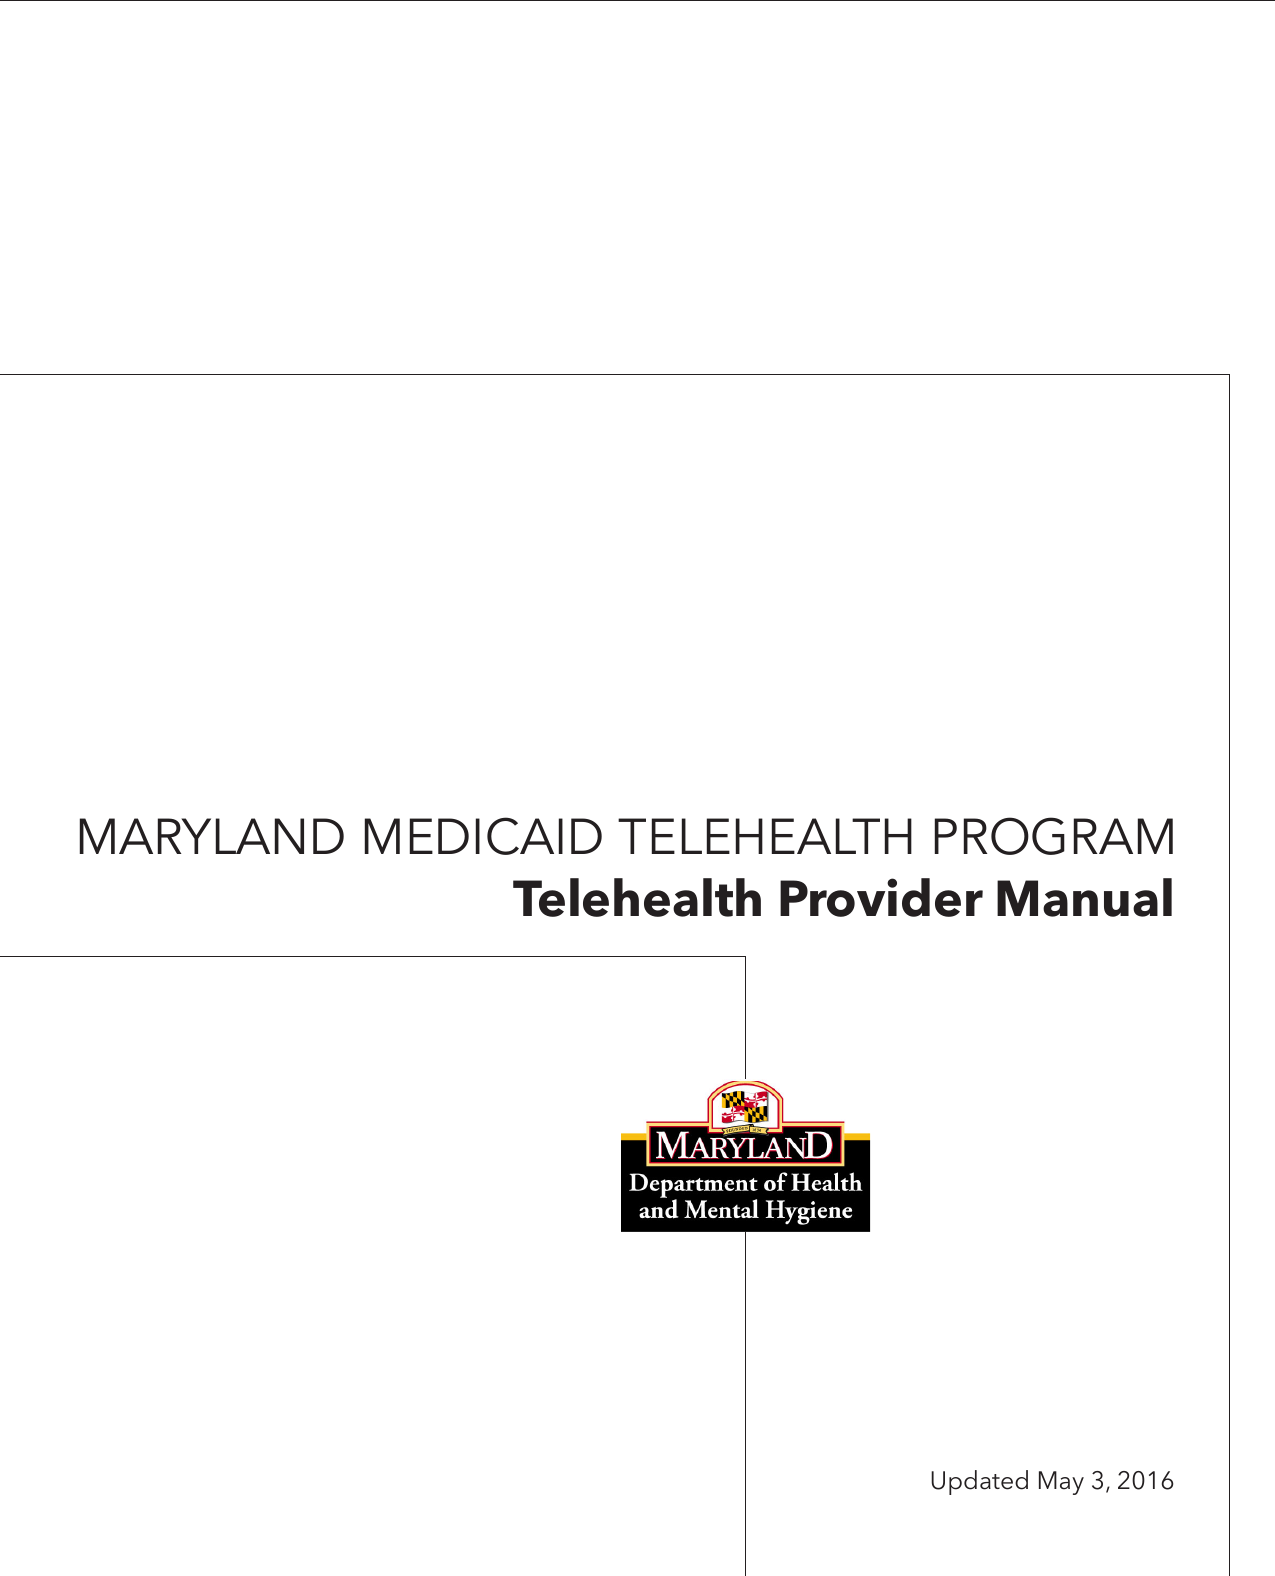 Page 1 of 11 - MARYLAND Telehealth-Program-Manual